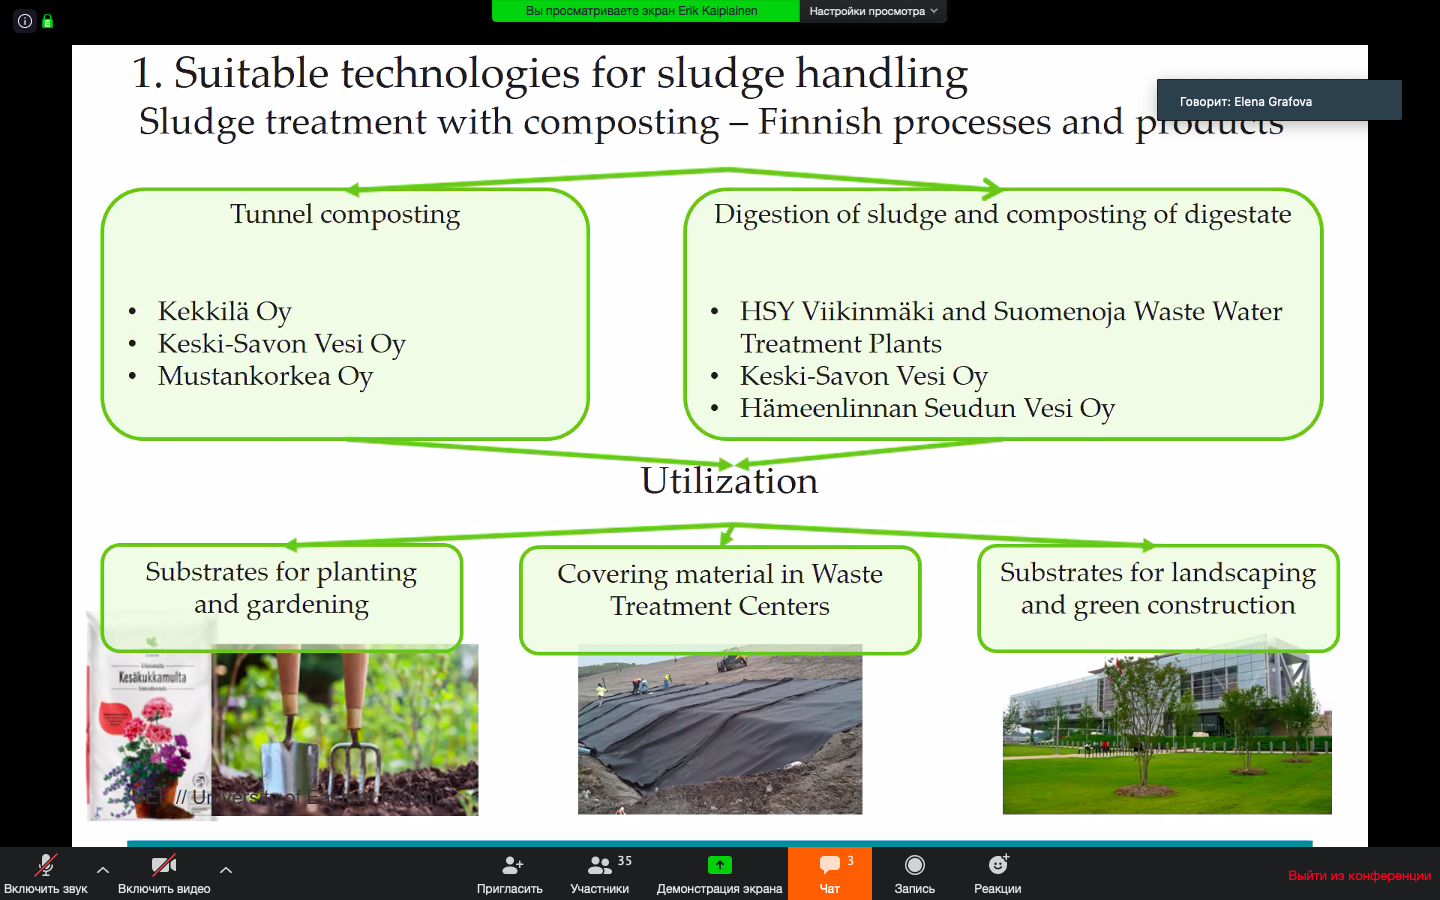 Sludge handling technologies